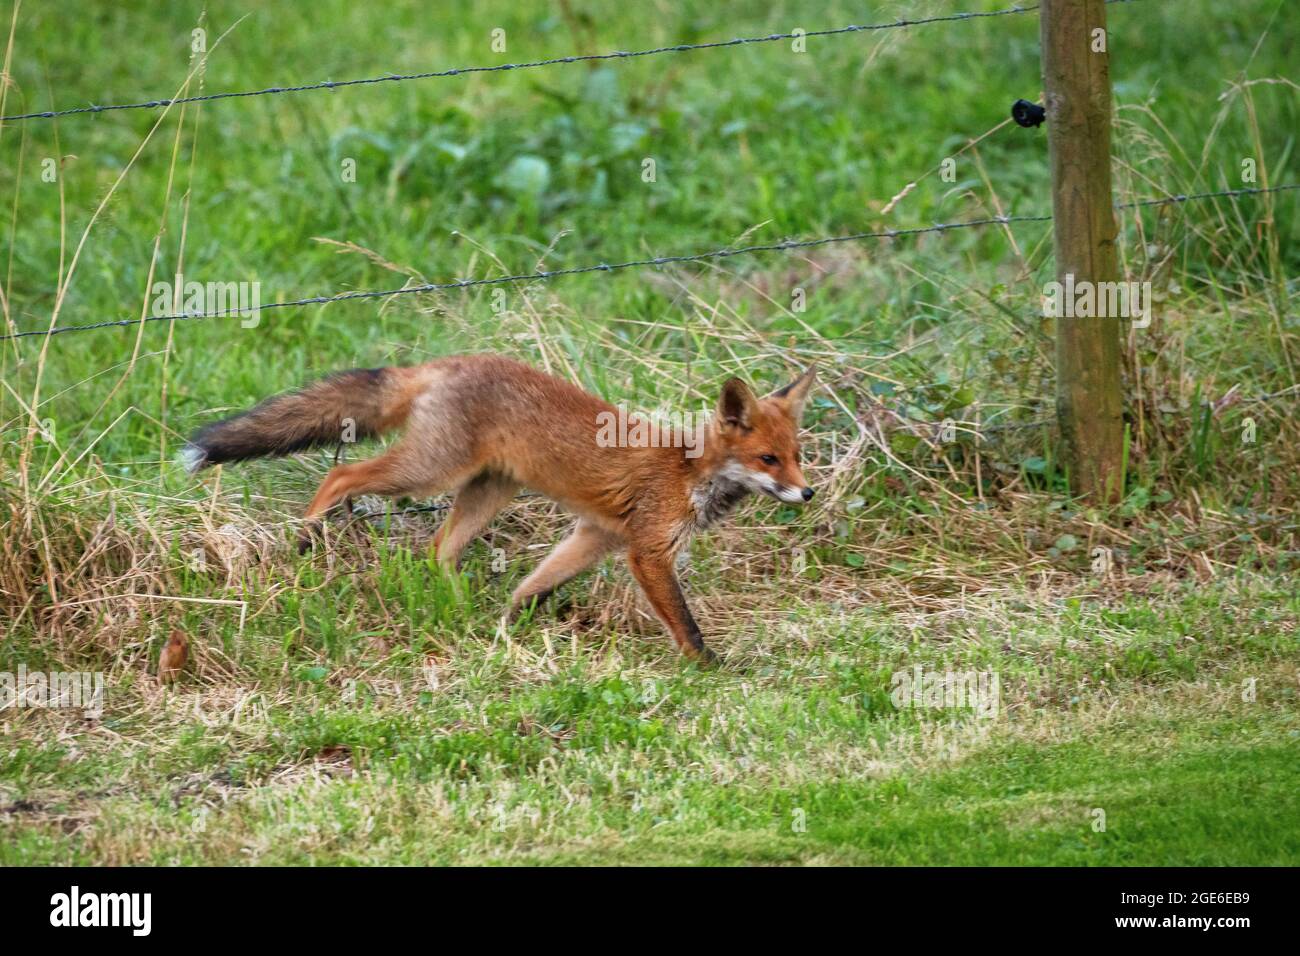 The Netherlands, Õs-Graveland, Rural estate Hilverbeek. Red fox entering garden. Fence. Stock Photo